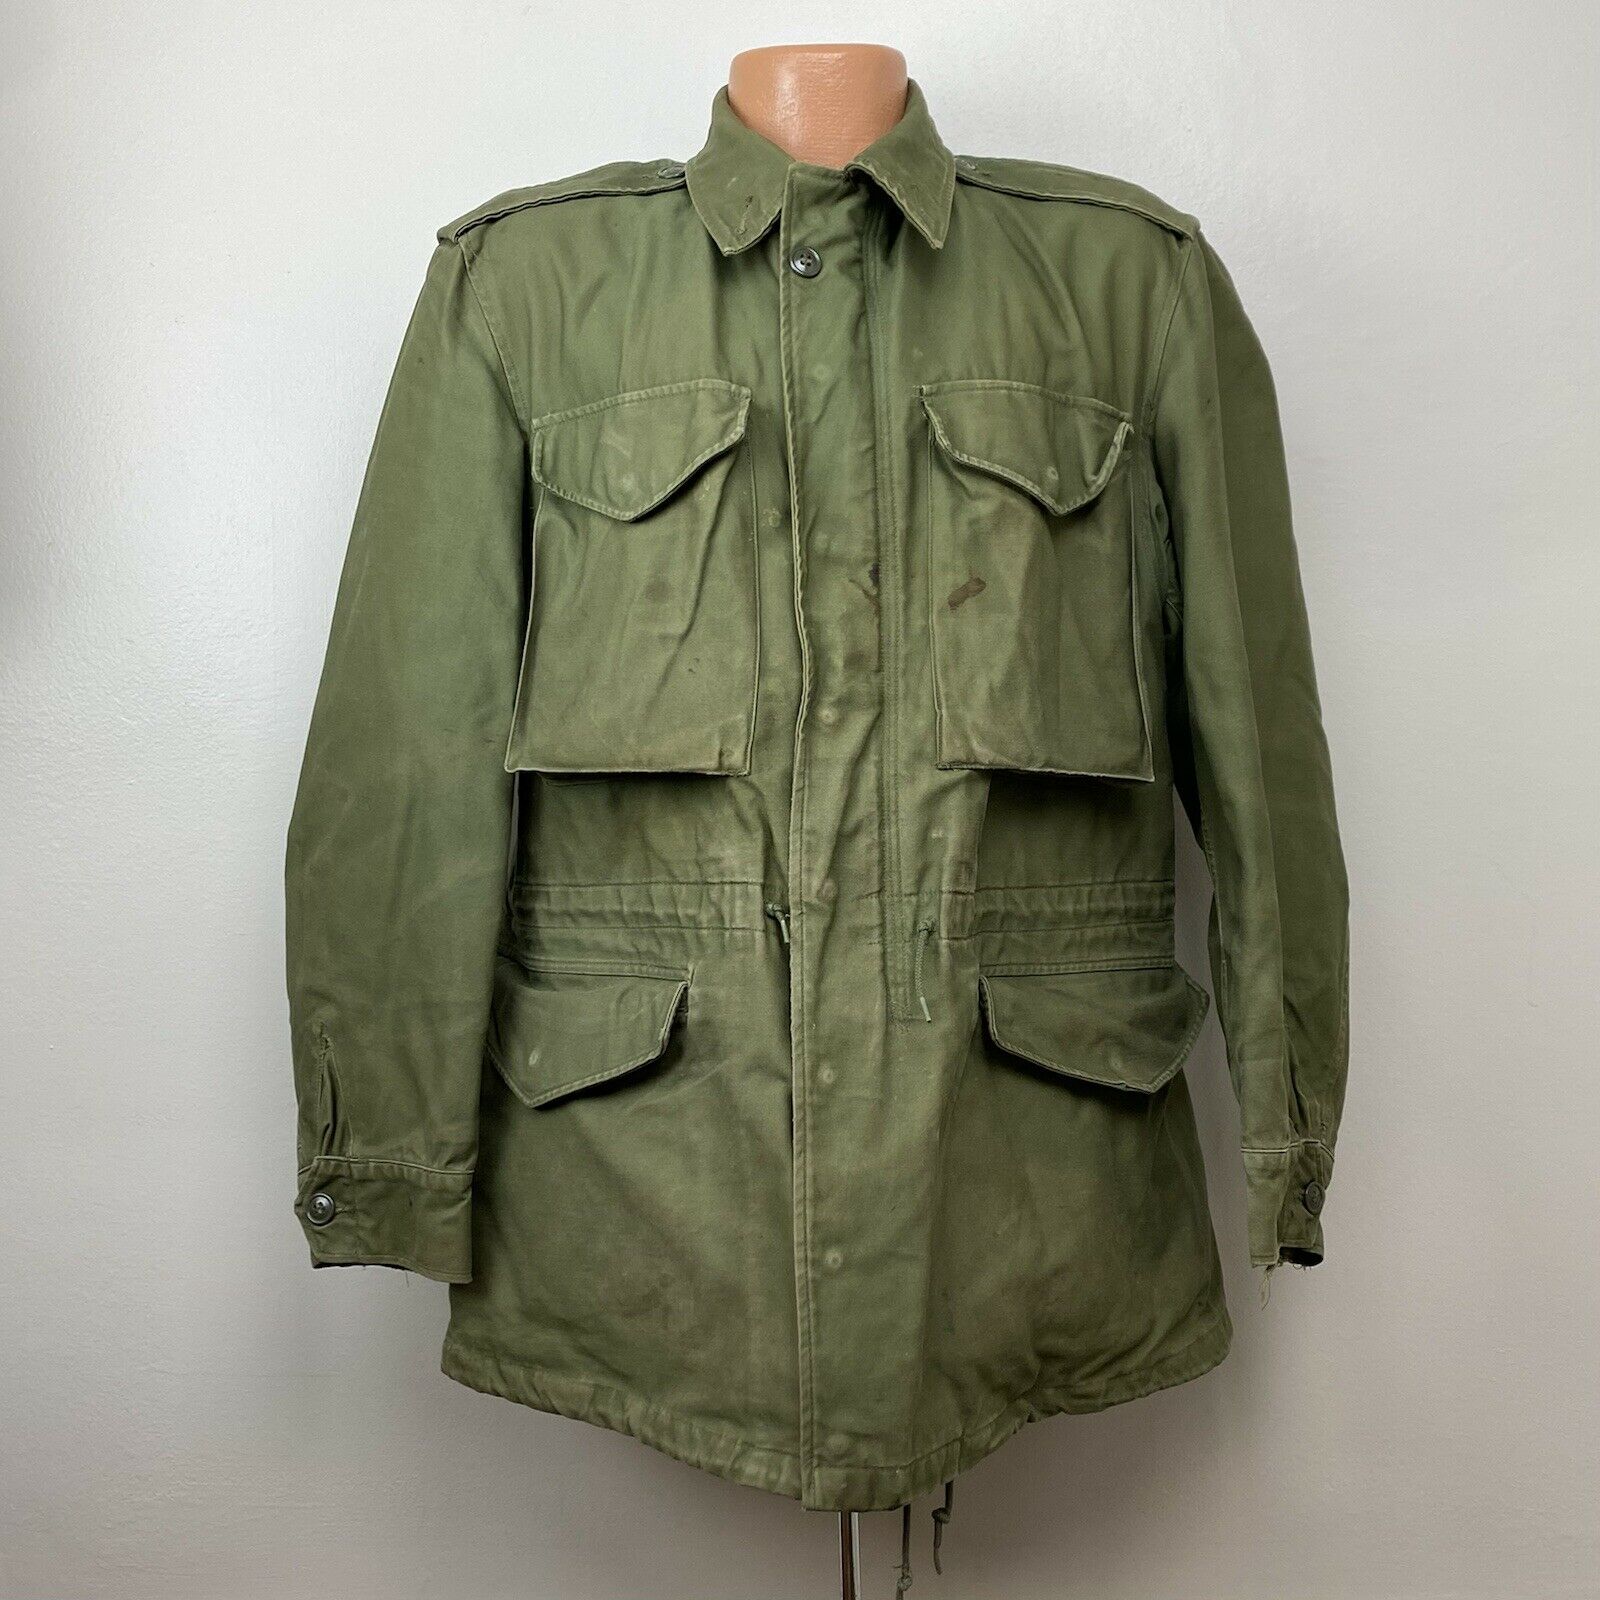 1950s/60s M-1951 OG107 US Military Field Jacket, Size Small, Vietnam War Era